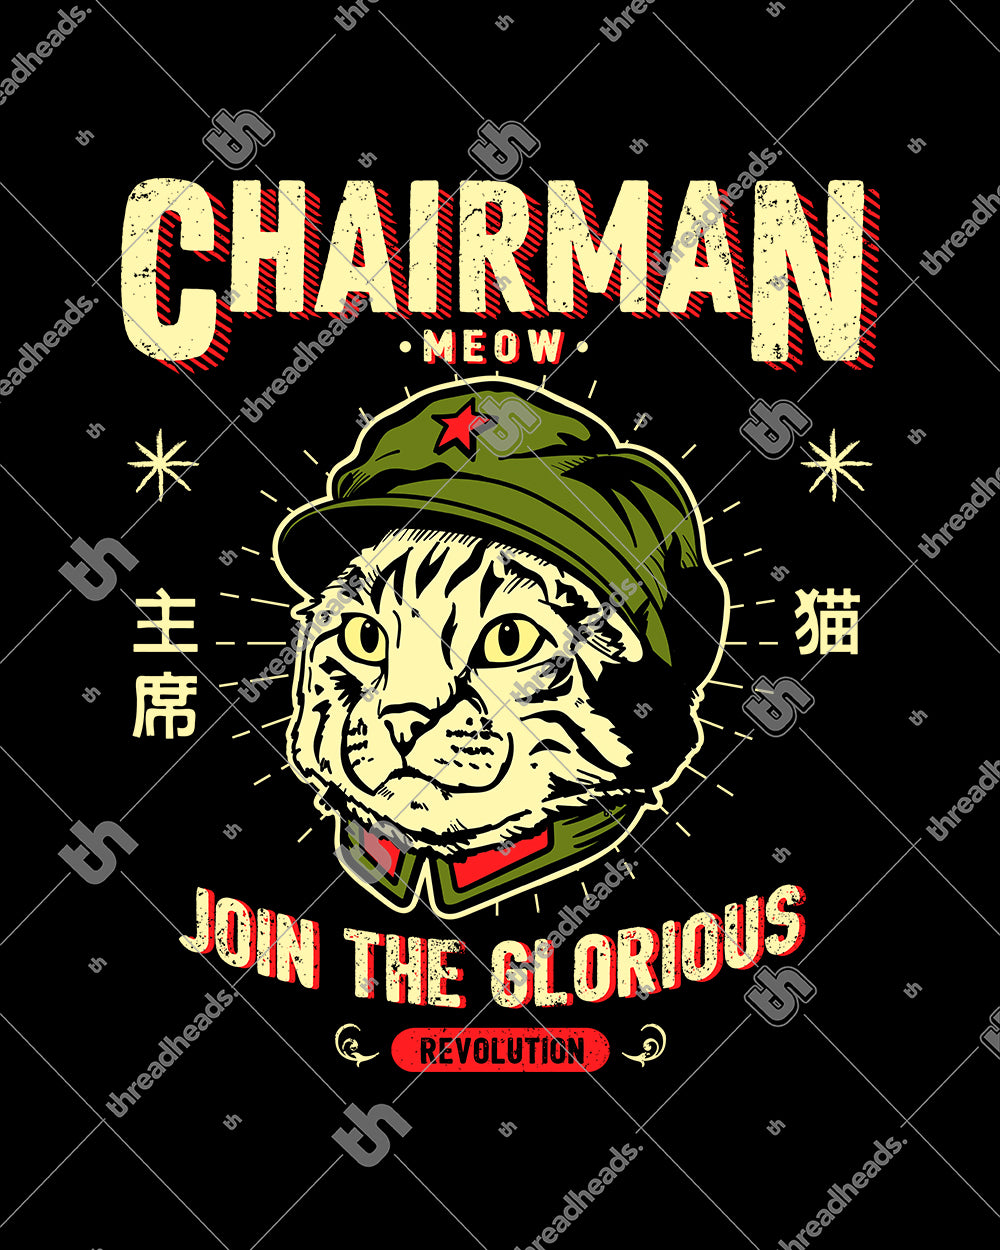 Chairman Meow Sweater Australia Online #colour_black